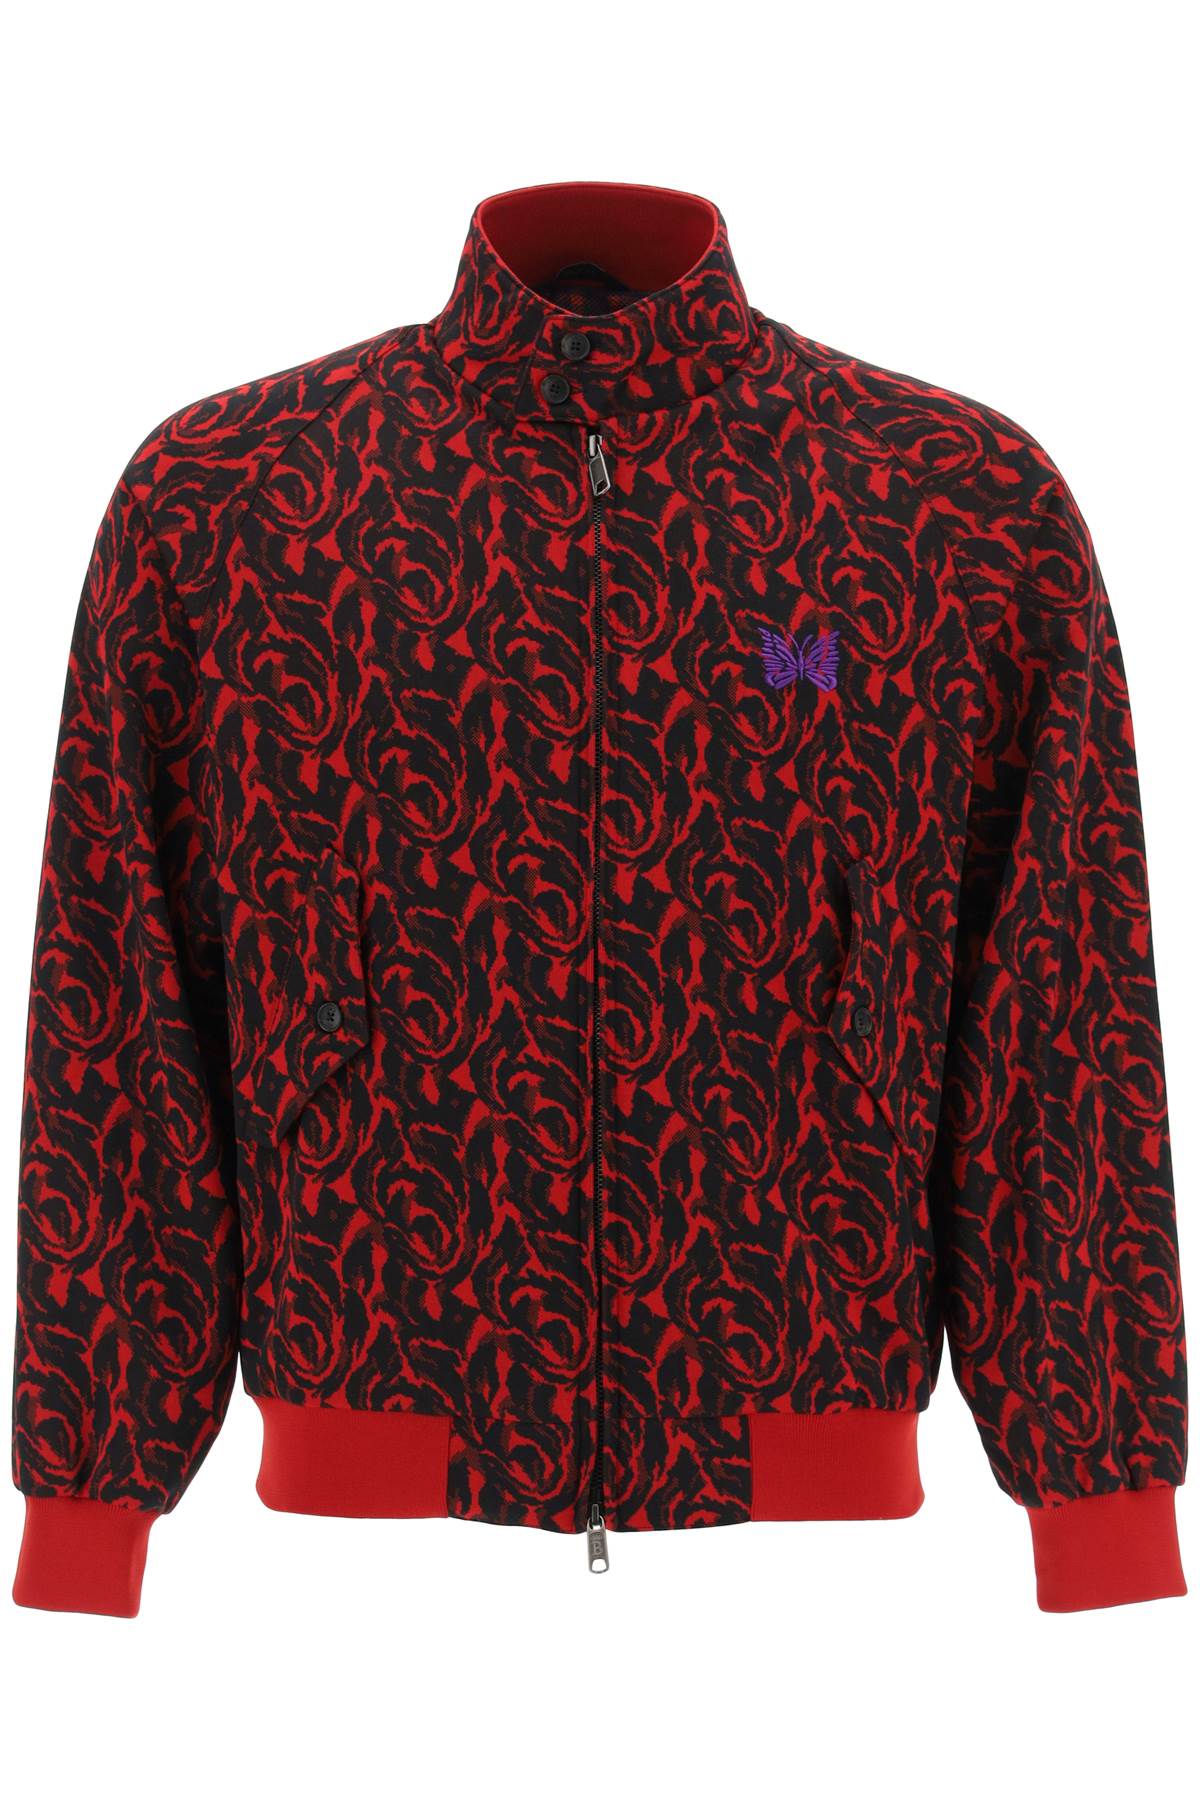 Louis Vuitton red Monogram Track Jacket